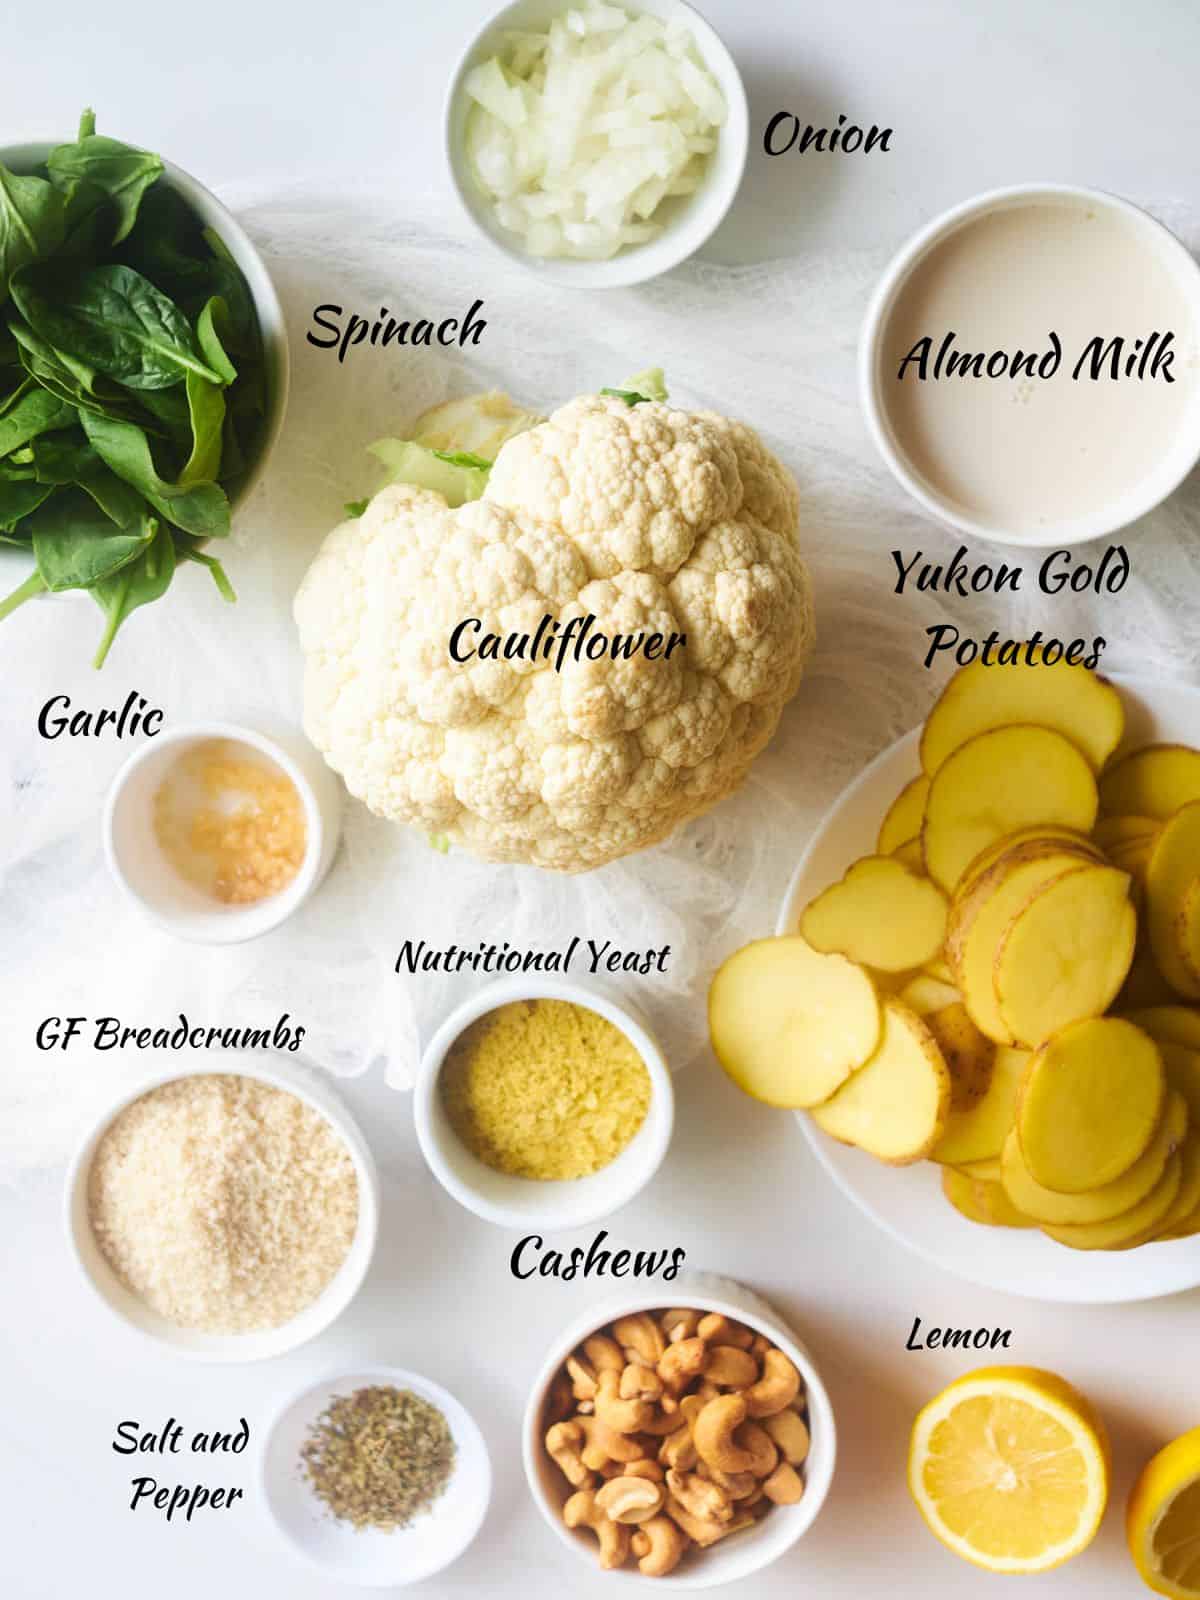 Vegan Potato Casserole Ingredients: spinach, cauliflower, onions, Yukon gold potatoes, breadcrumbs, nutritional yeast, salt and pepper, cashews, lemon